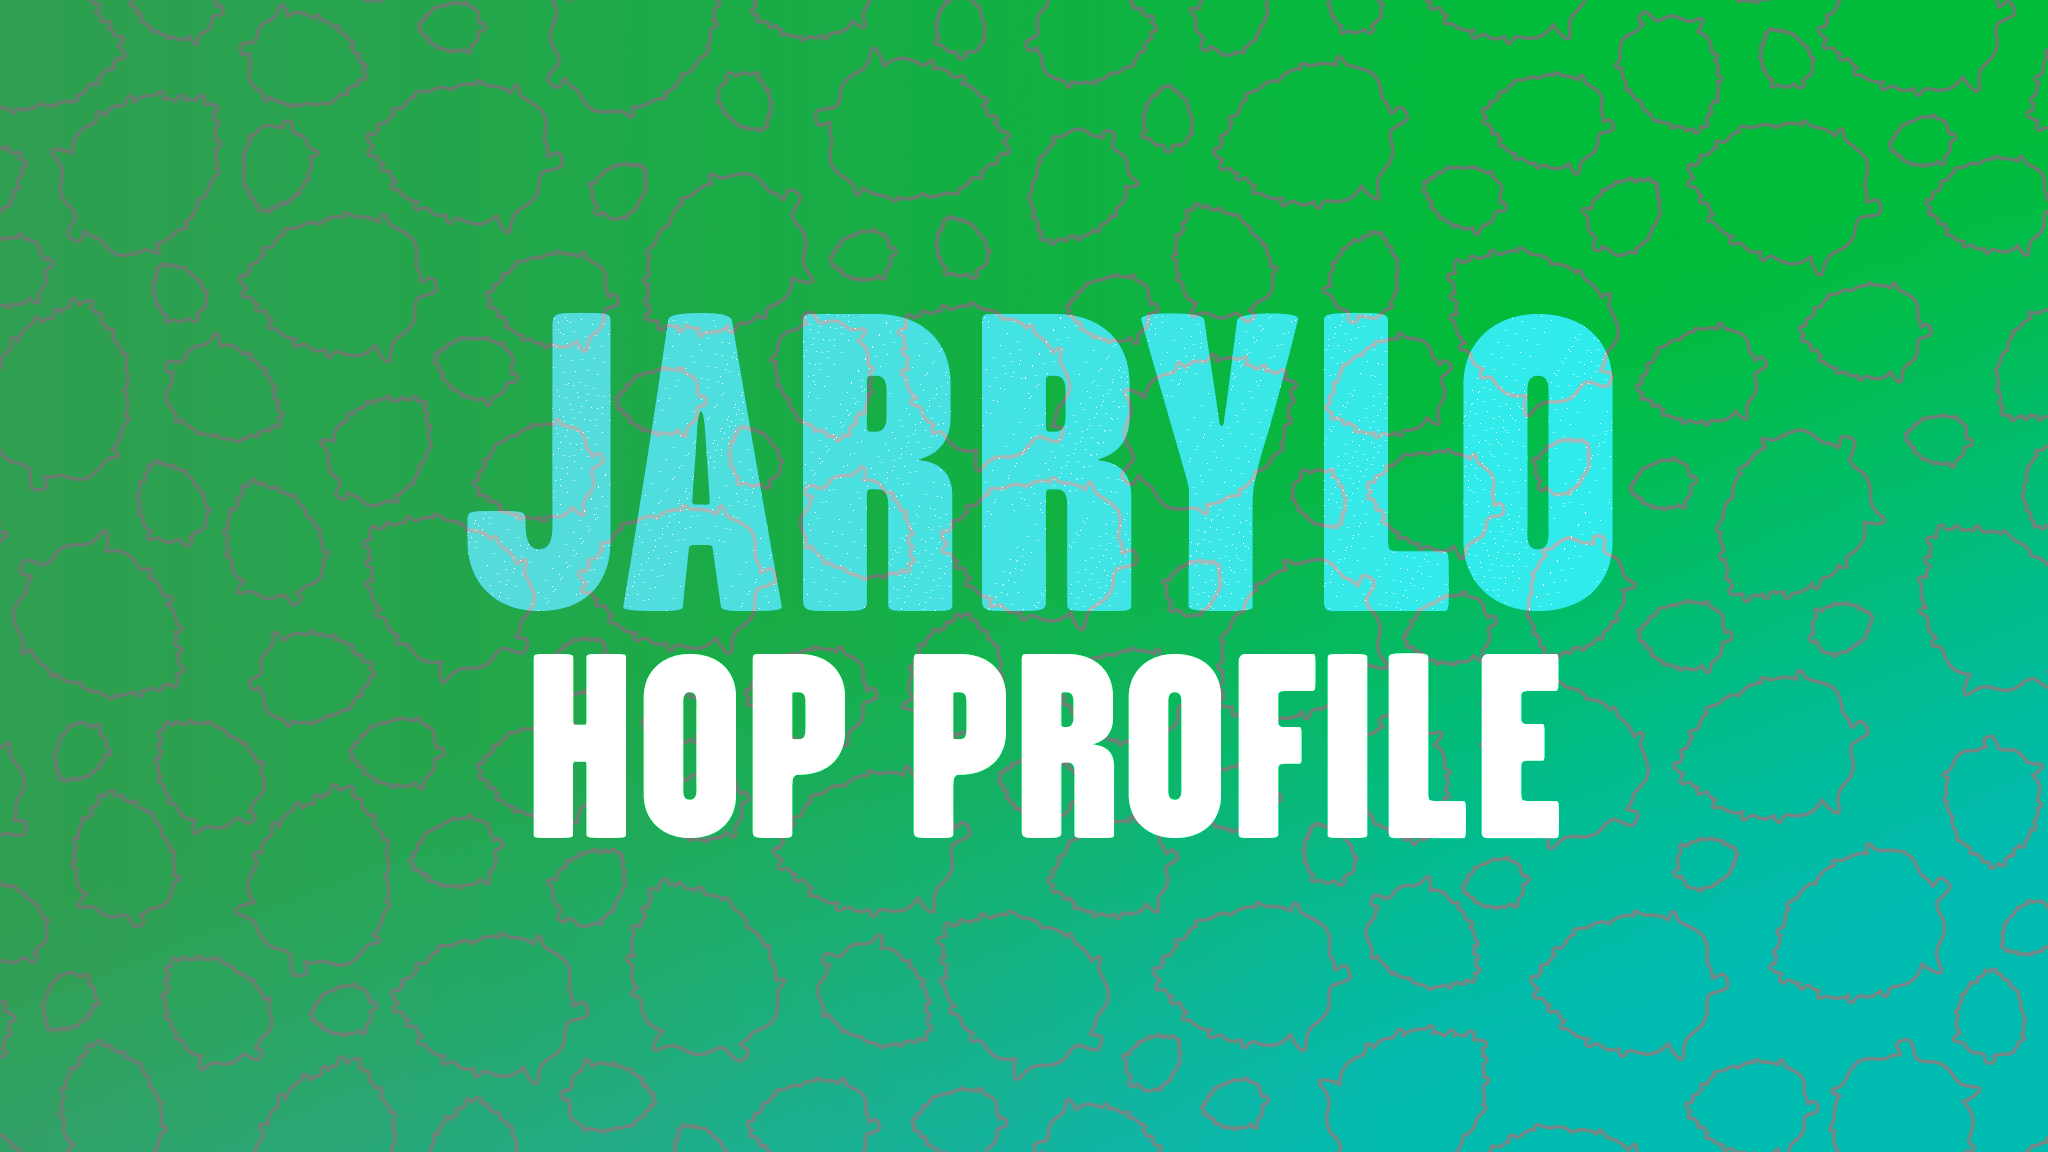 Hop Profile: Jarrylo